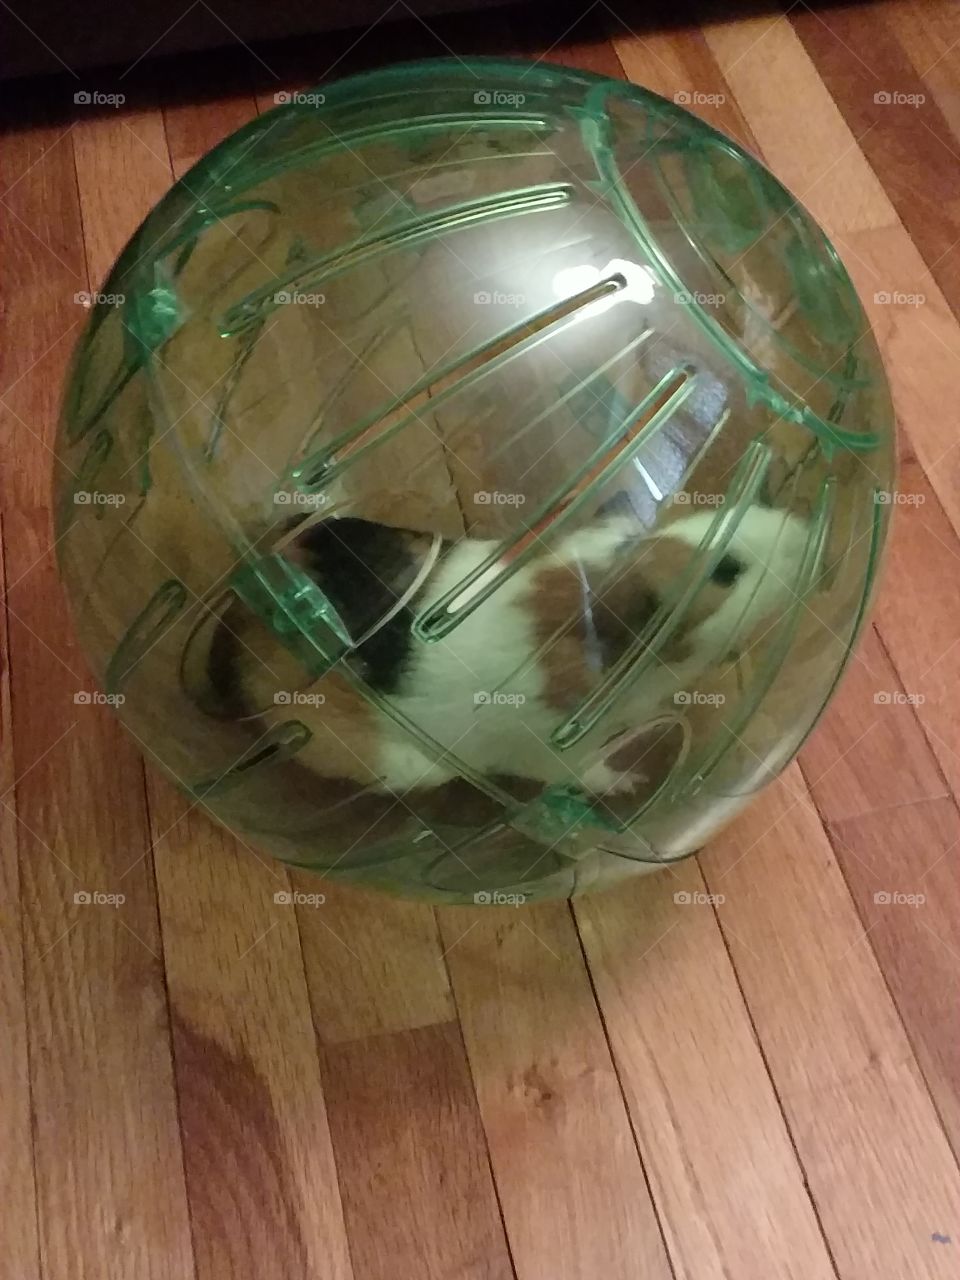 Hamster/guinea pig in green rolling ball exercising